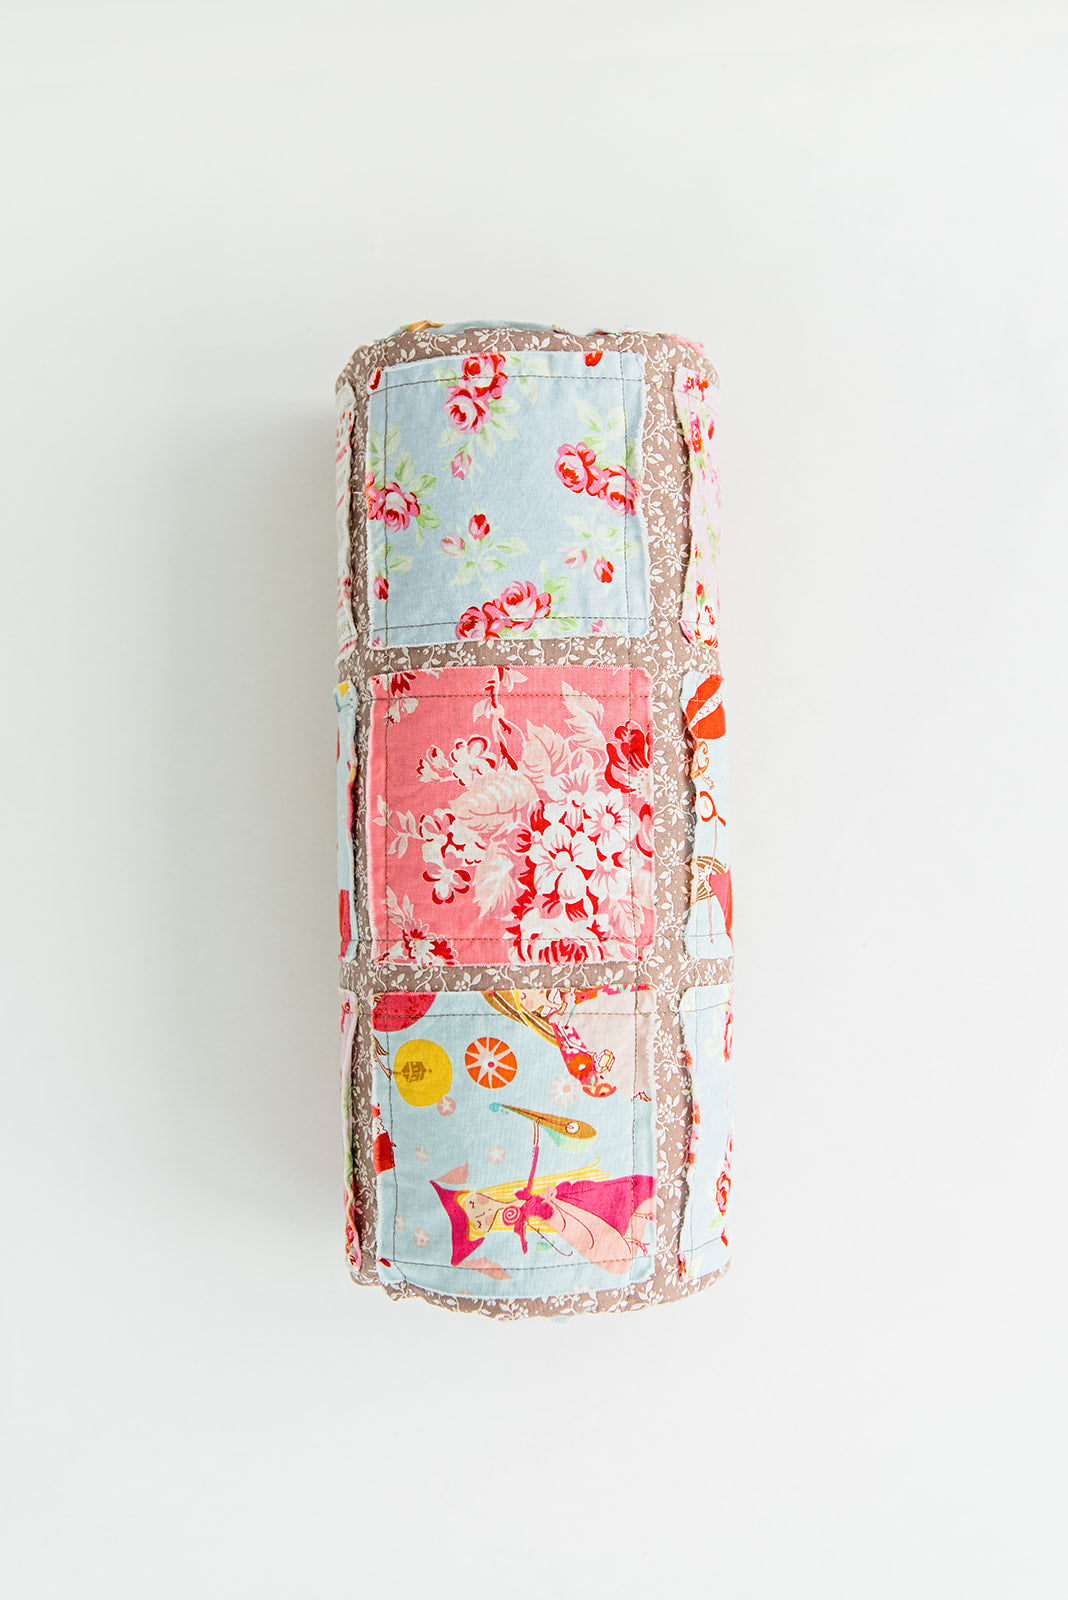 beautiful-new-mom-gift-handmade-quilt-from-sugar-owl-design